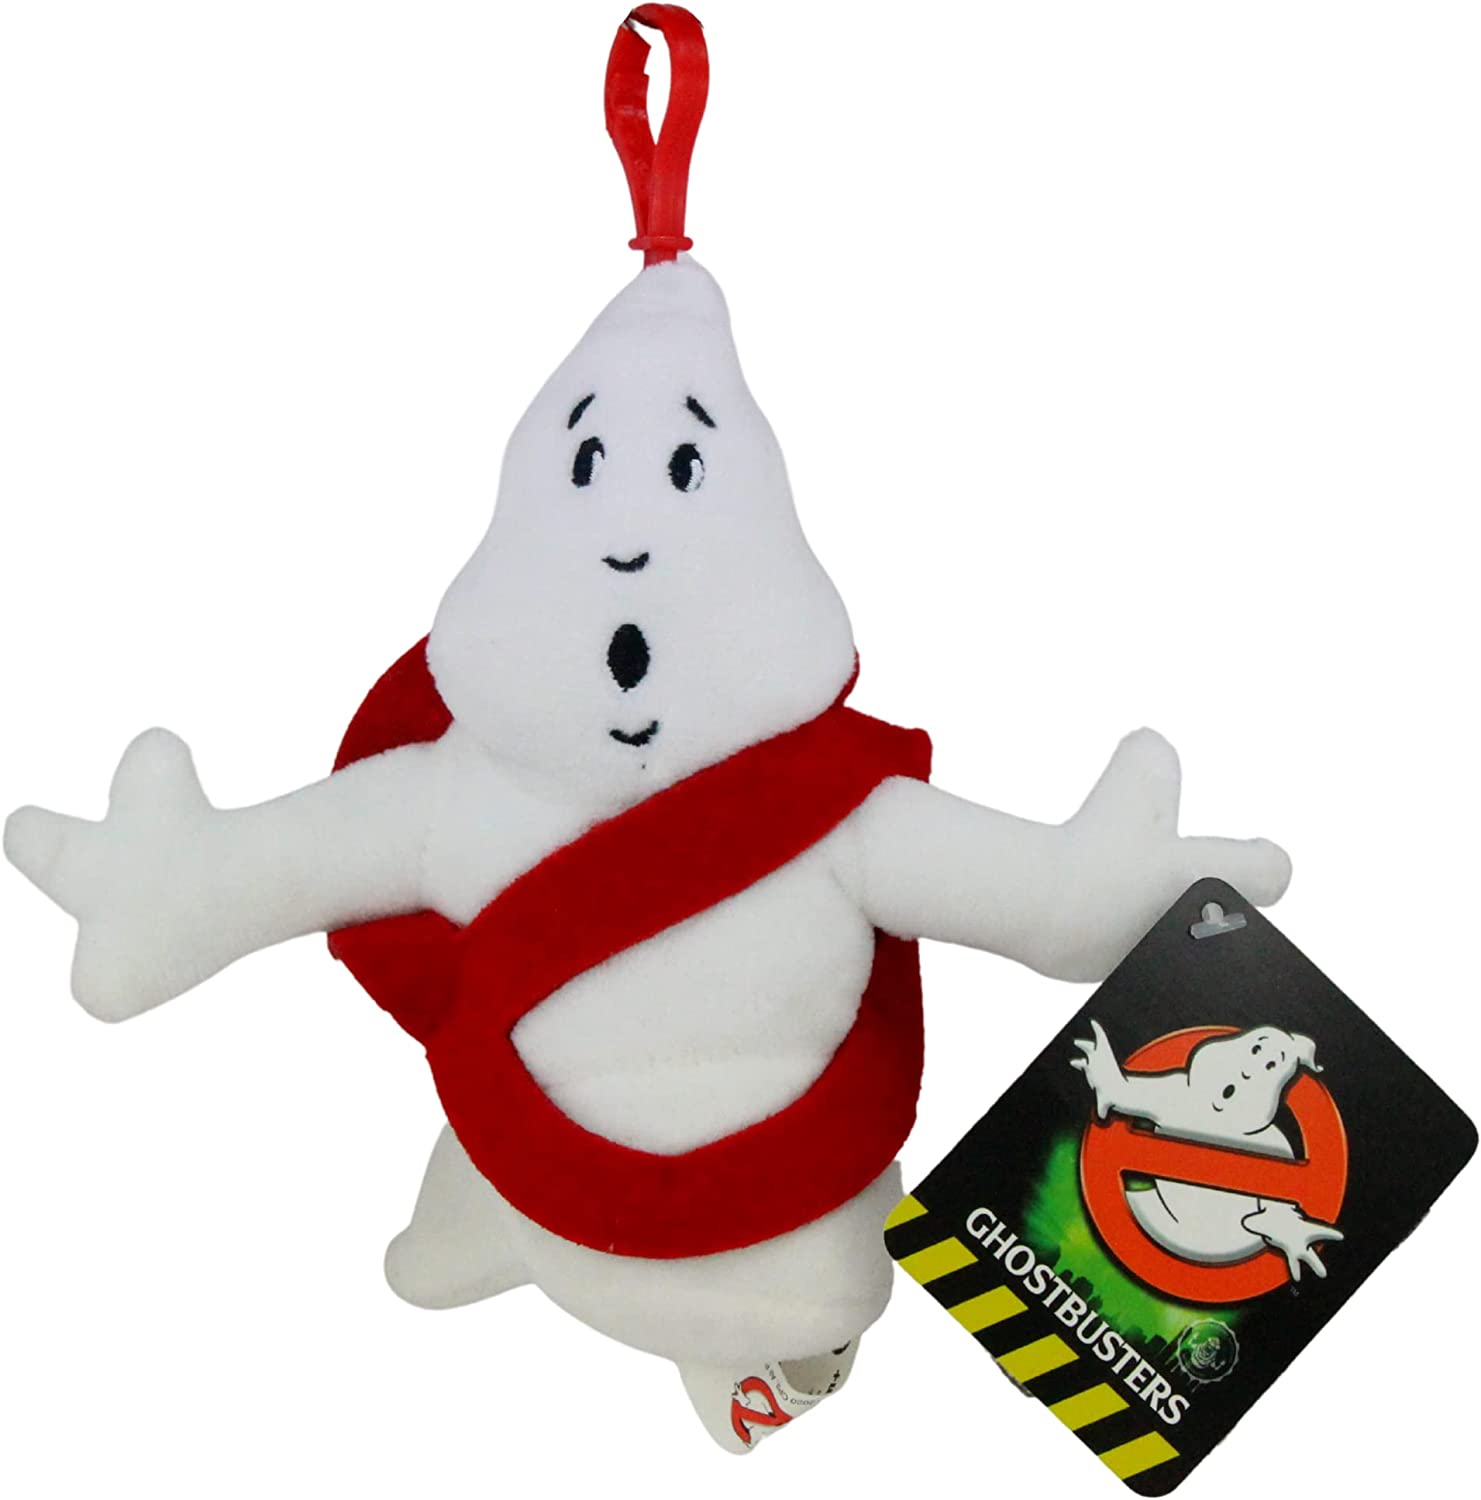 Ghostbusters No Ghost Logo 7" Plush & "I Ain't Afraid of No Ghost" 330ml Mug Bundle - Toptoys2u